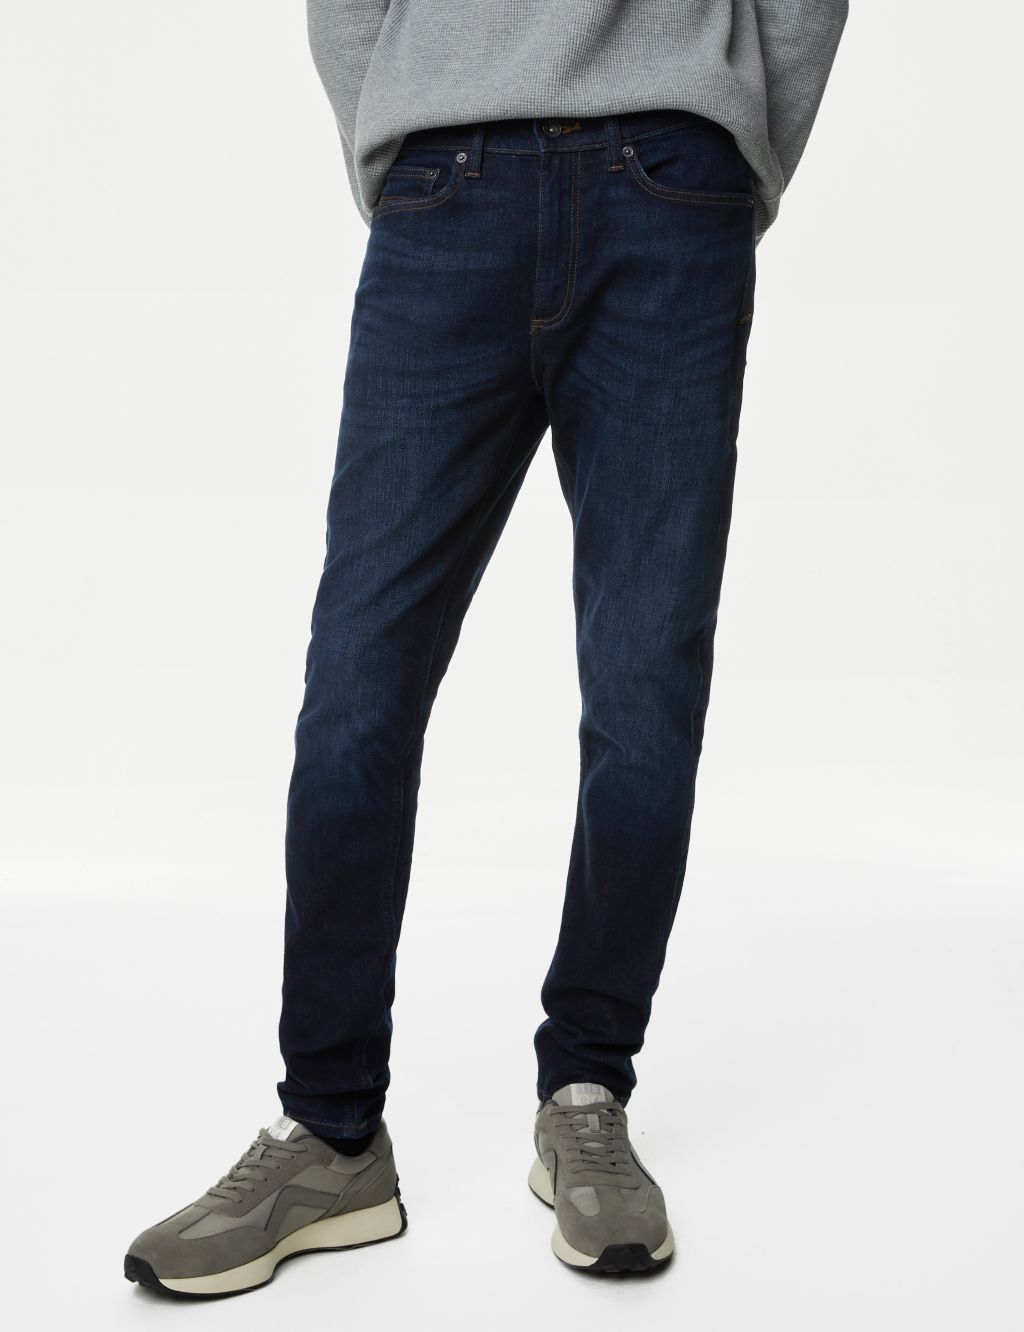 Men's Skinny Fit Jeans | M&S